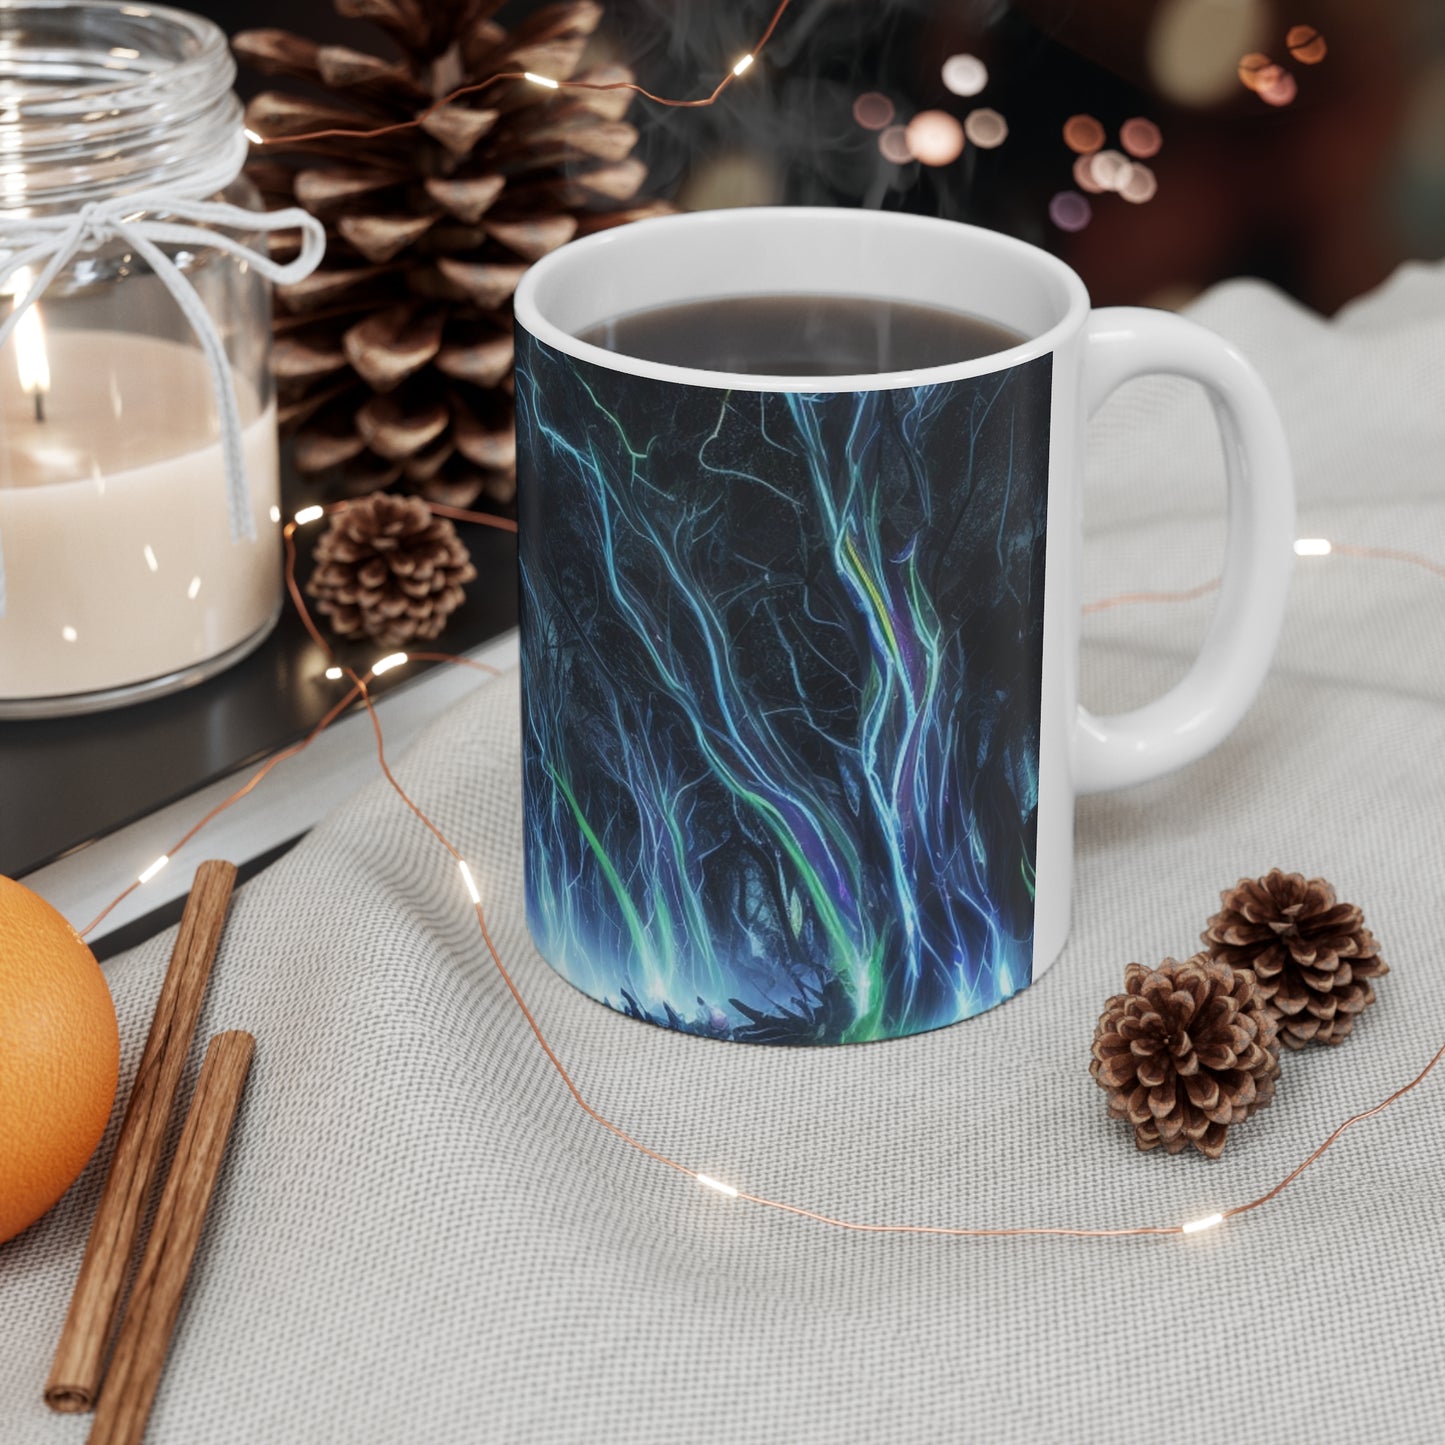 Blue And Green Lightning In Forest At Night Mug - Ceramic Coffee Mug 11oz